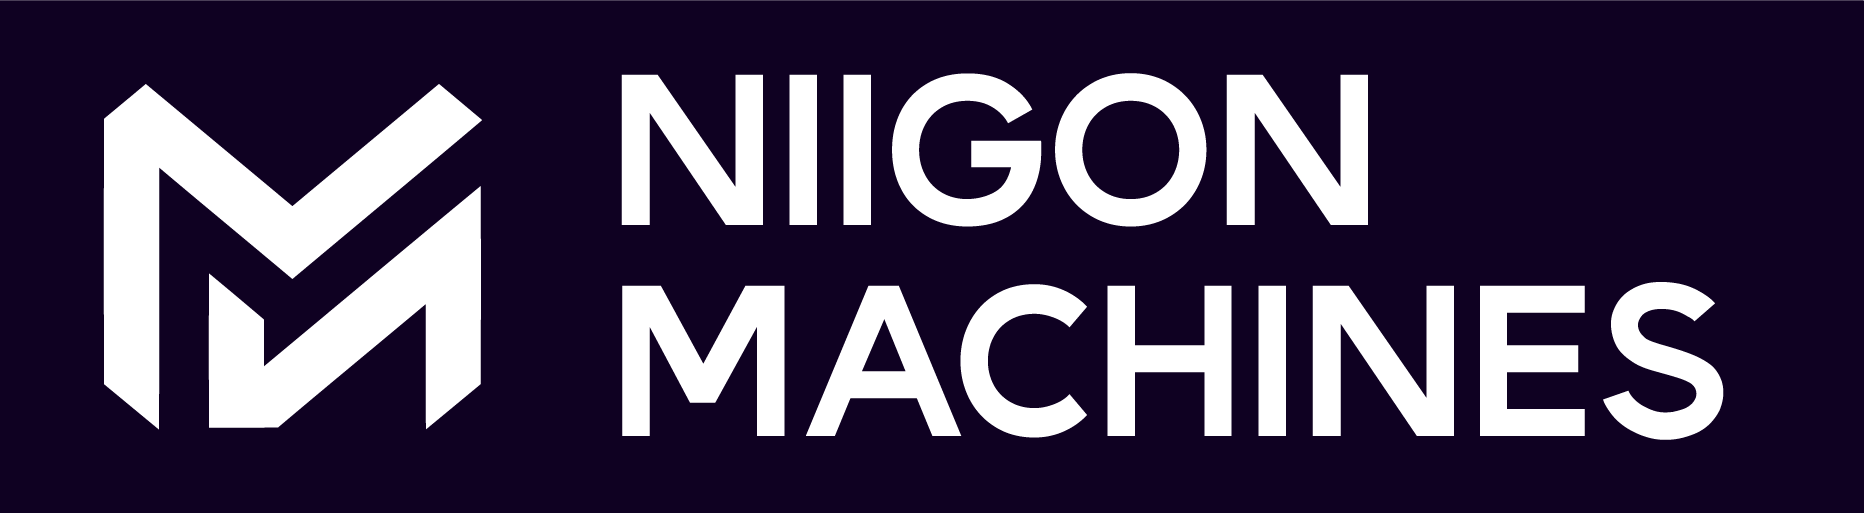 Niigon Machines